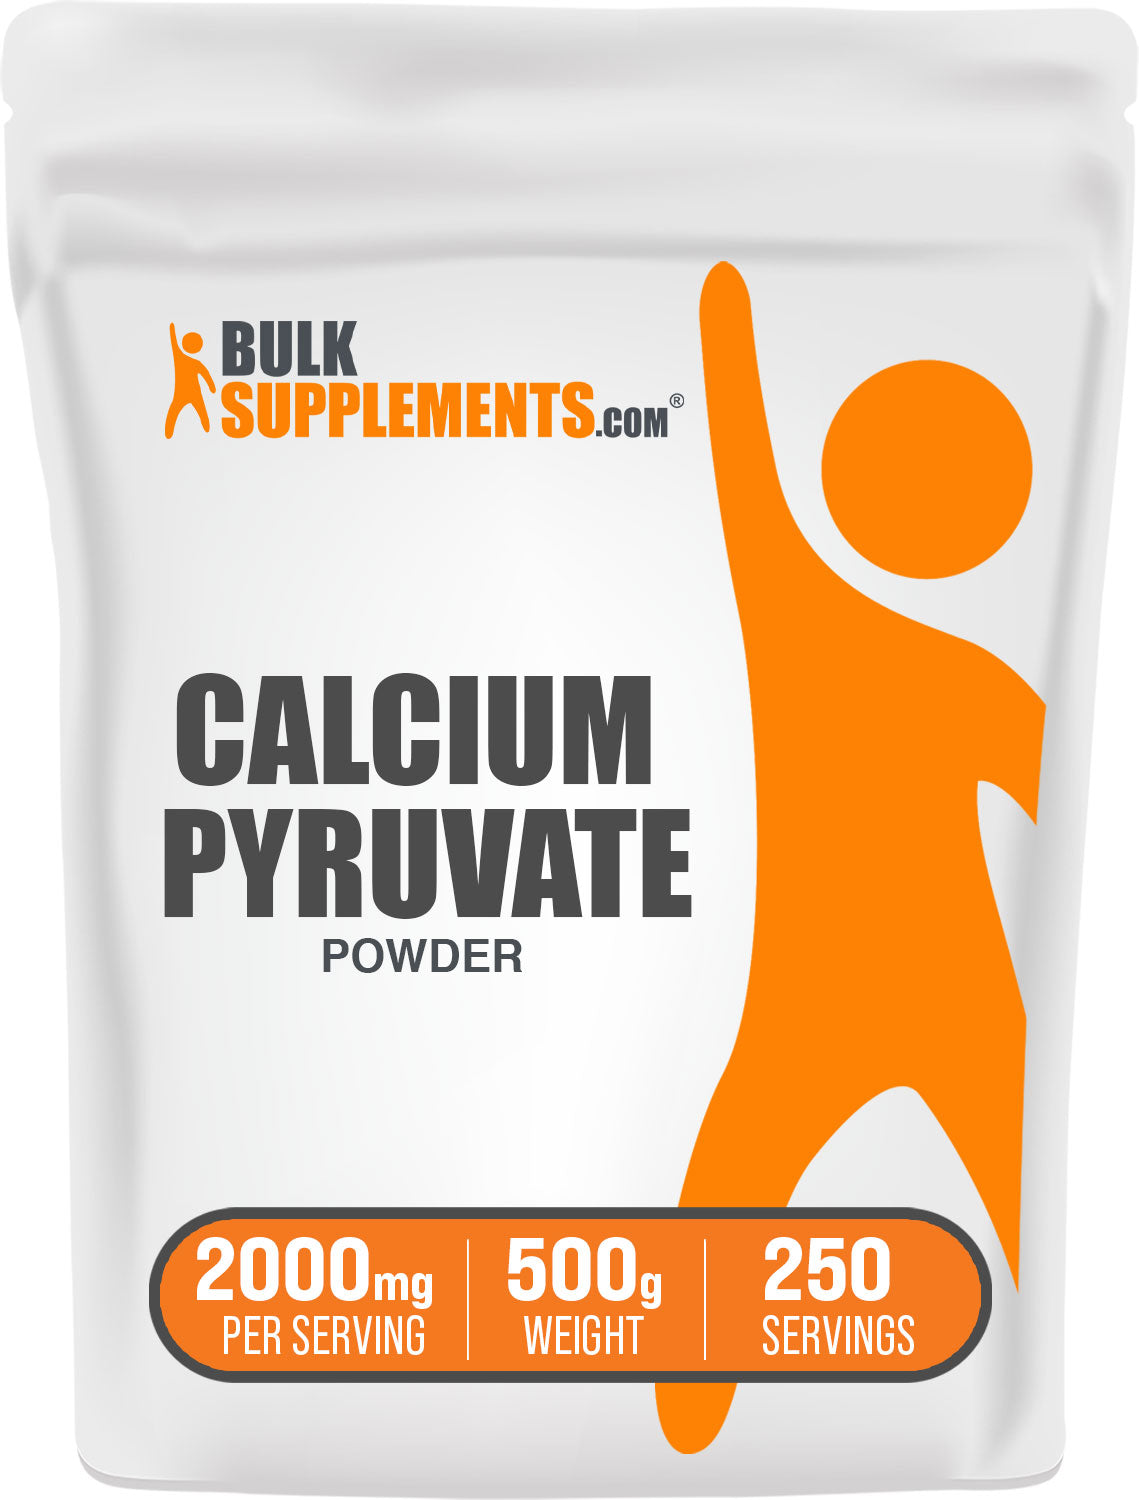 BulkSupplements.com Calcium Pyruvate Powder 500g Bag